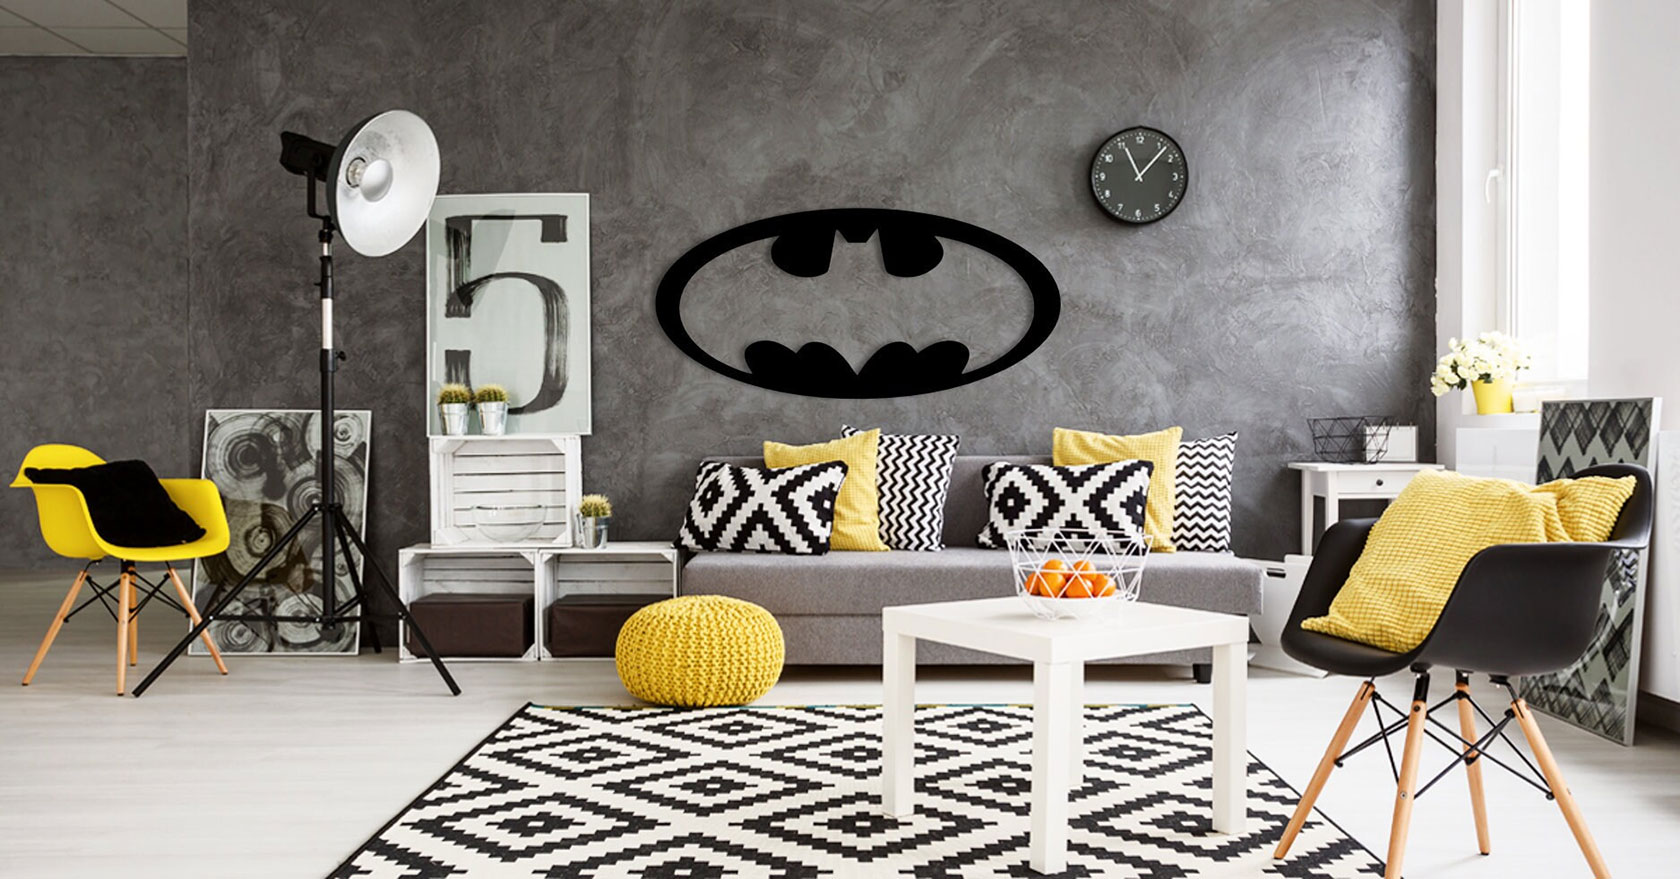 Batman Inspired Room Decor